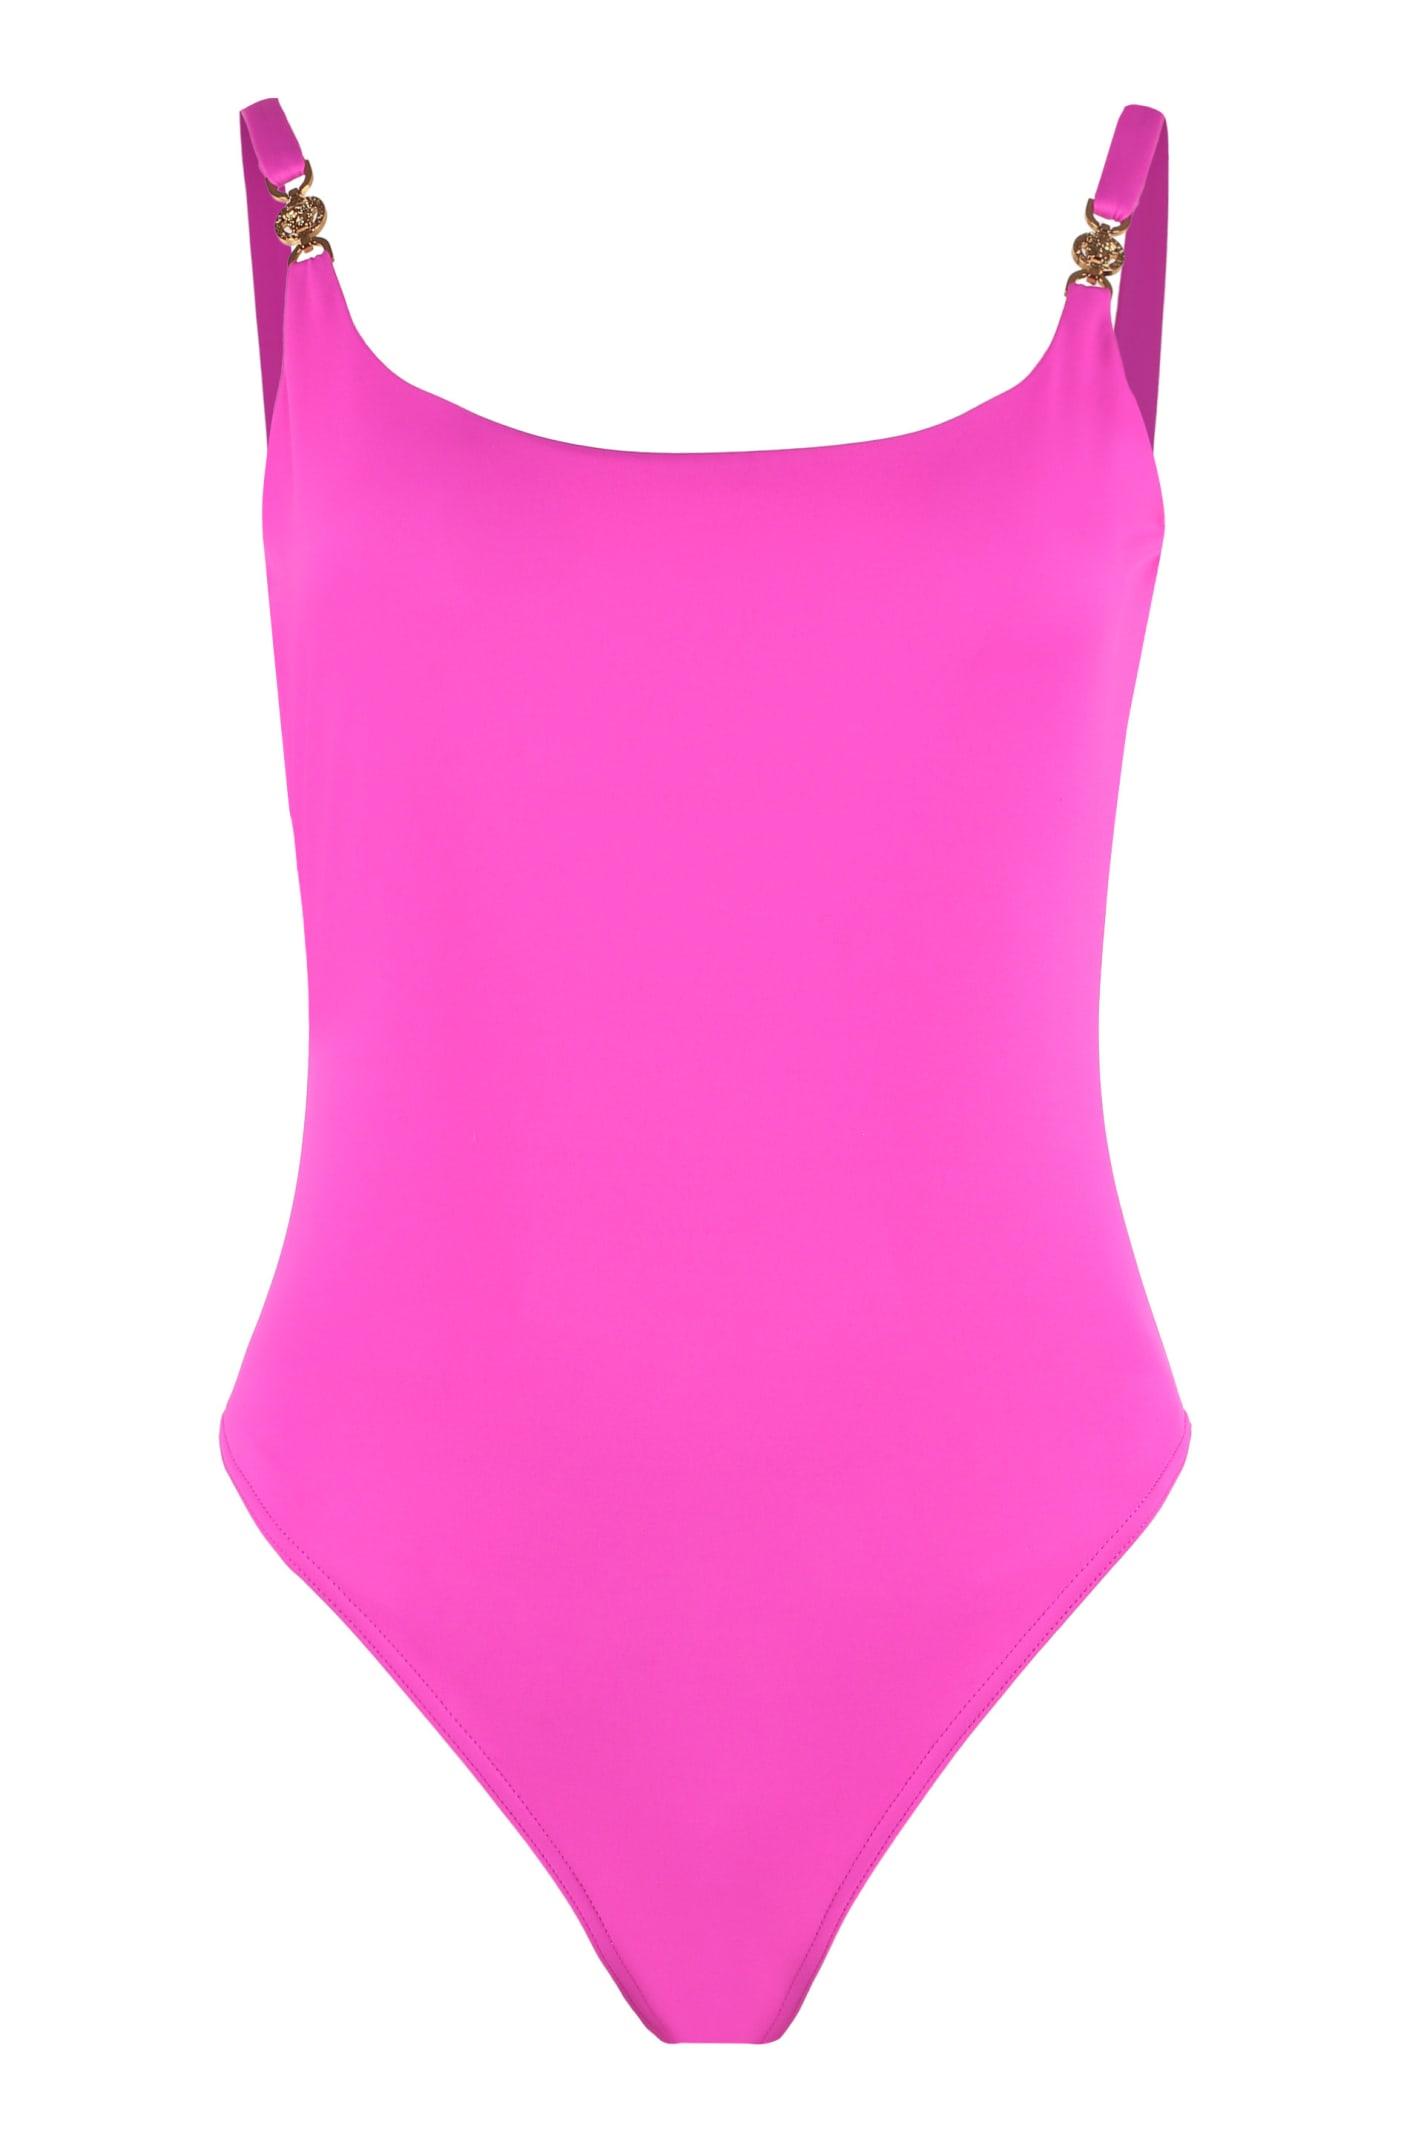 Versace Medusa Biggie One-piece Swimsuit in Pink | Lyst